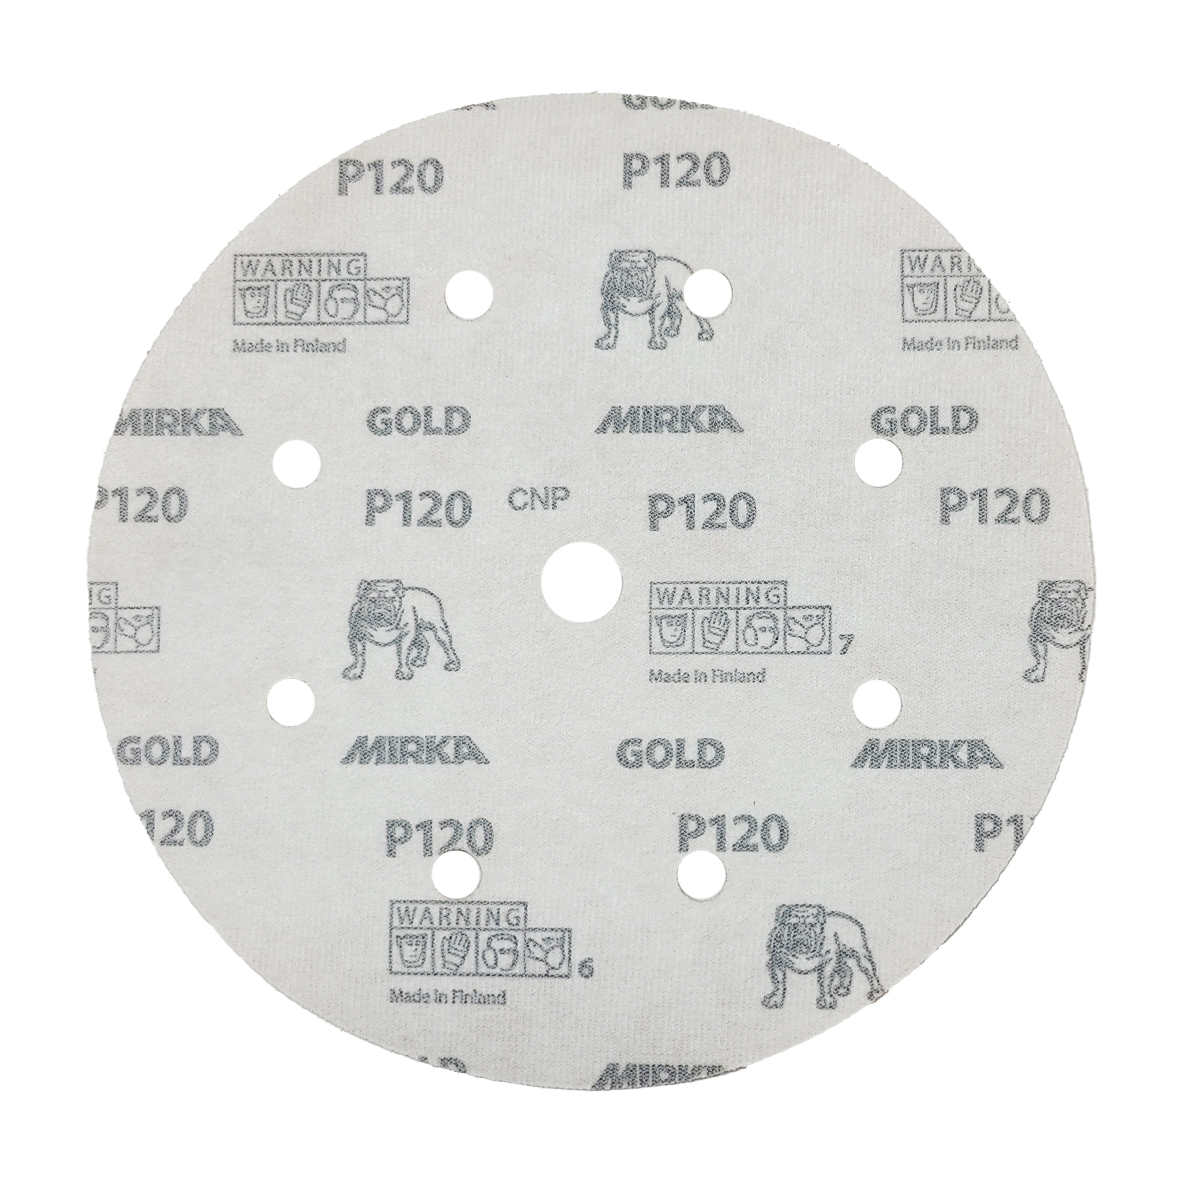 Abbildung Mirka Gold 200mm 9L Scheiben Rückseite.